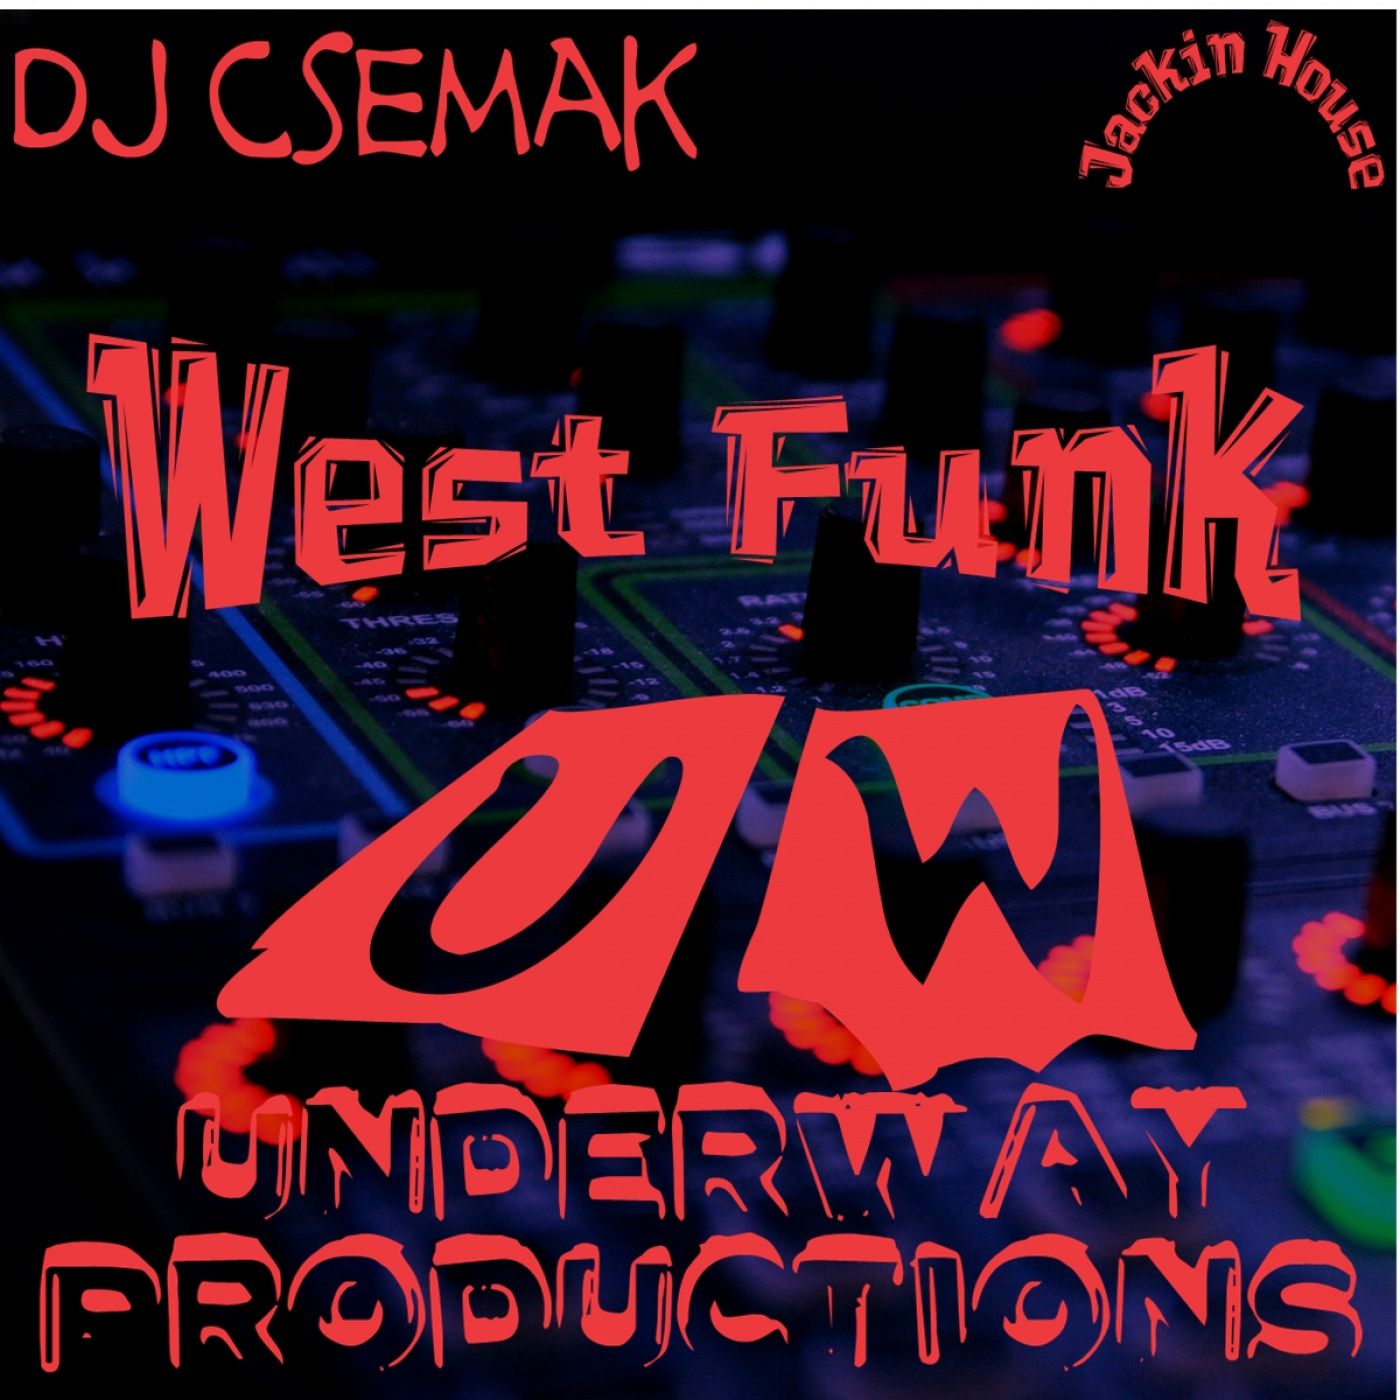 Dj Csemak - West Funk / Underway Productions